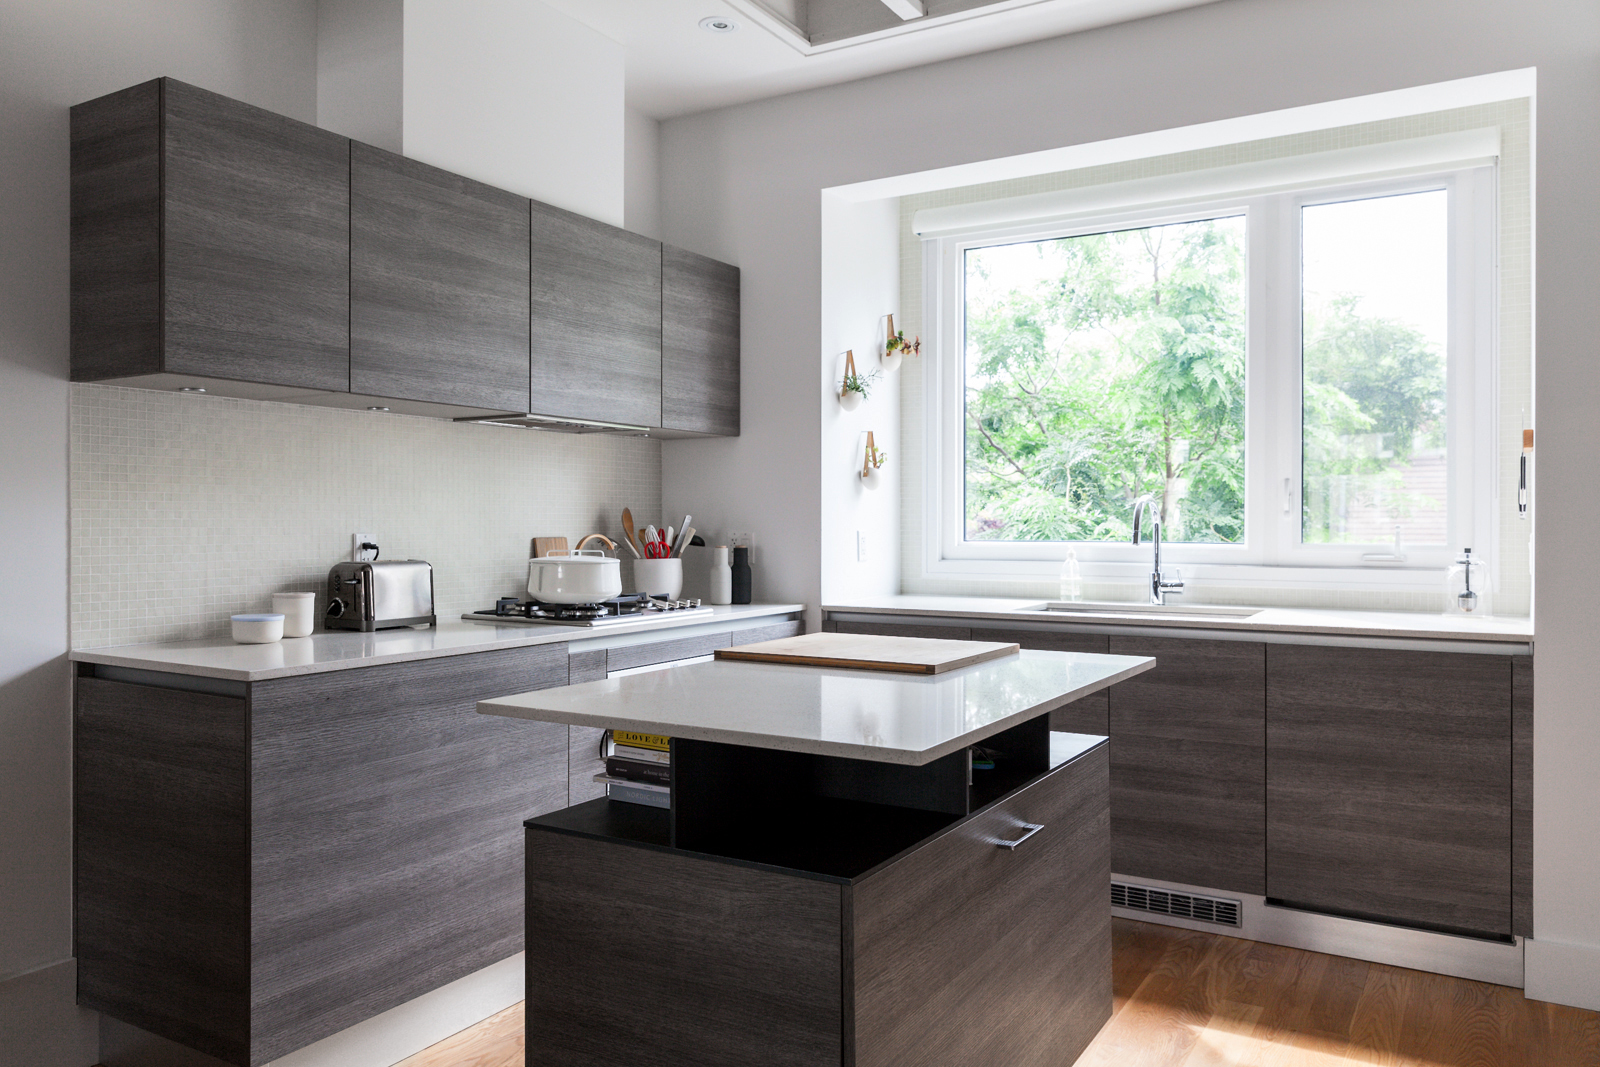 Modern minimalist kitchen design with dark-stained wood cabinetry.